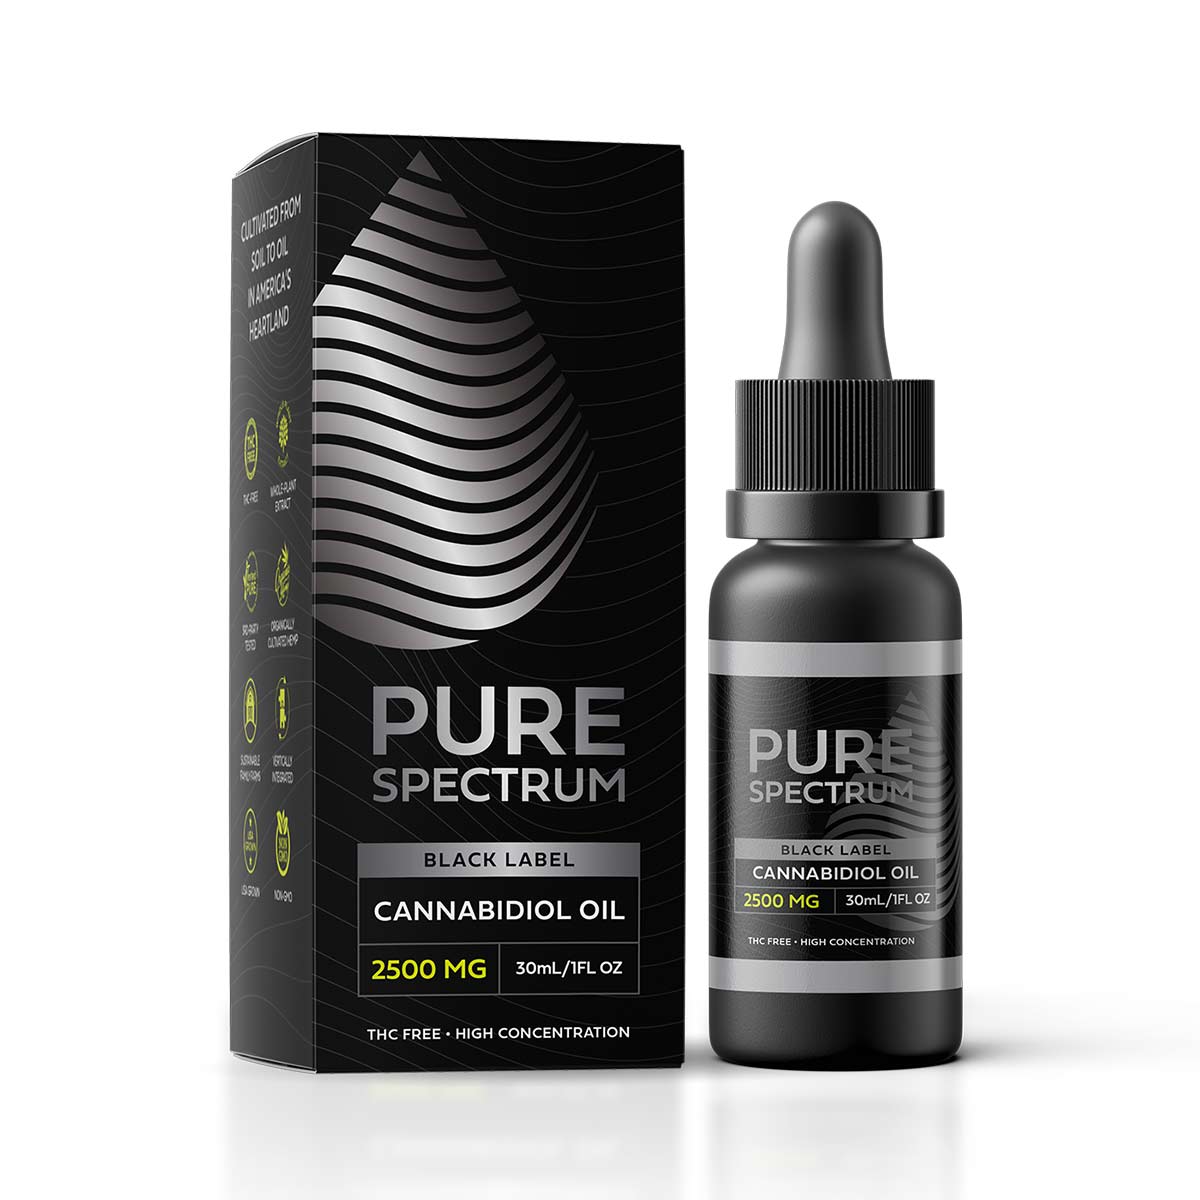 Pure Spectrum, Black Label Cannabidiol Oil, Broad Spectrum THC-Free, 1oz, 2500mg of CBD